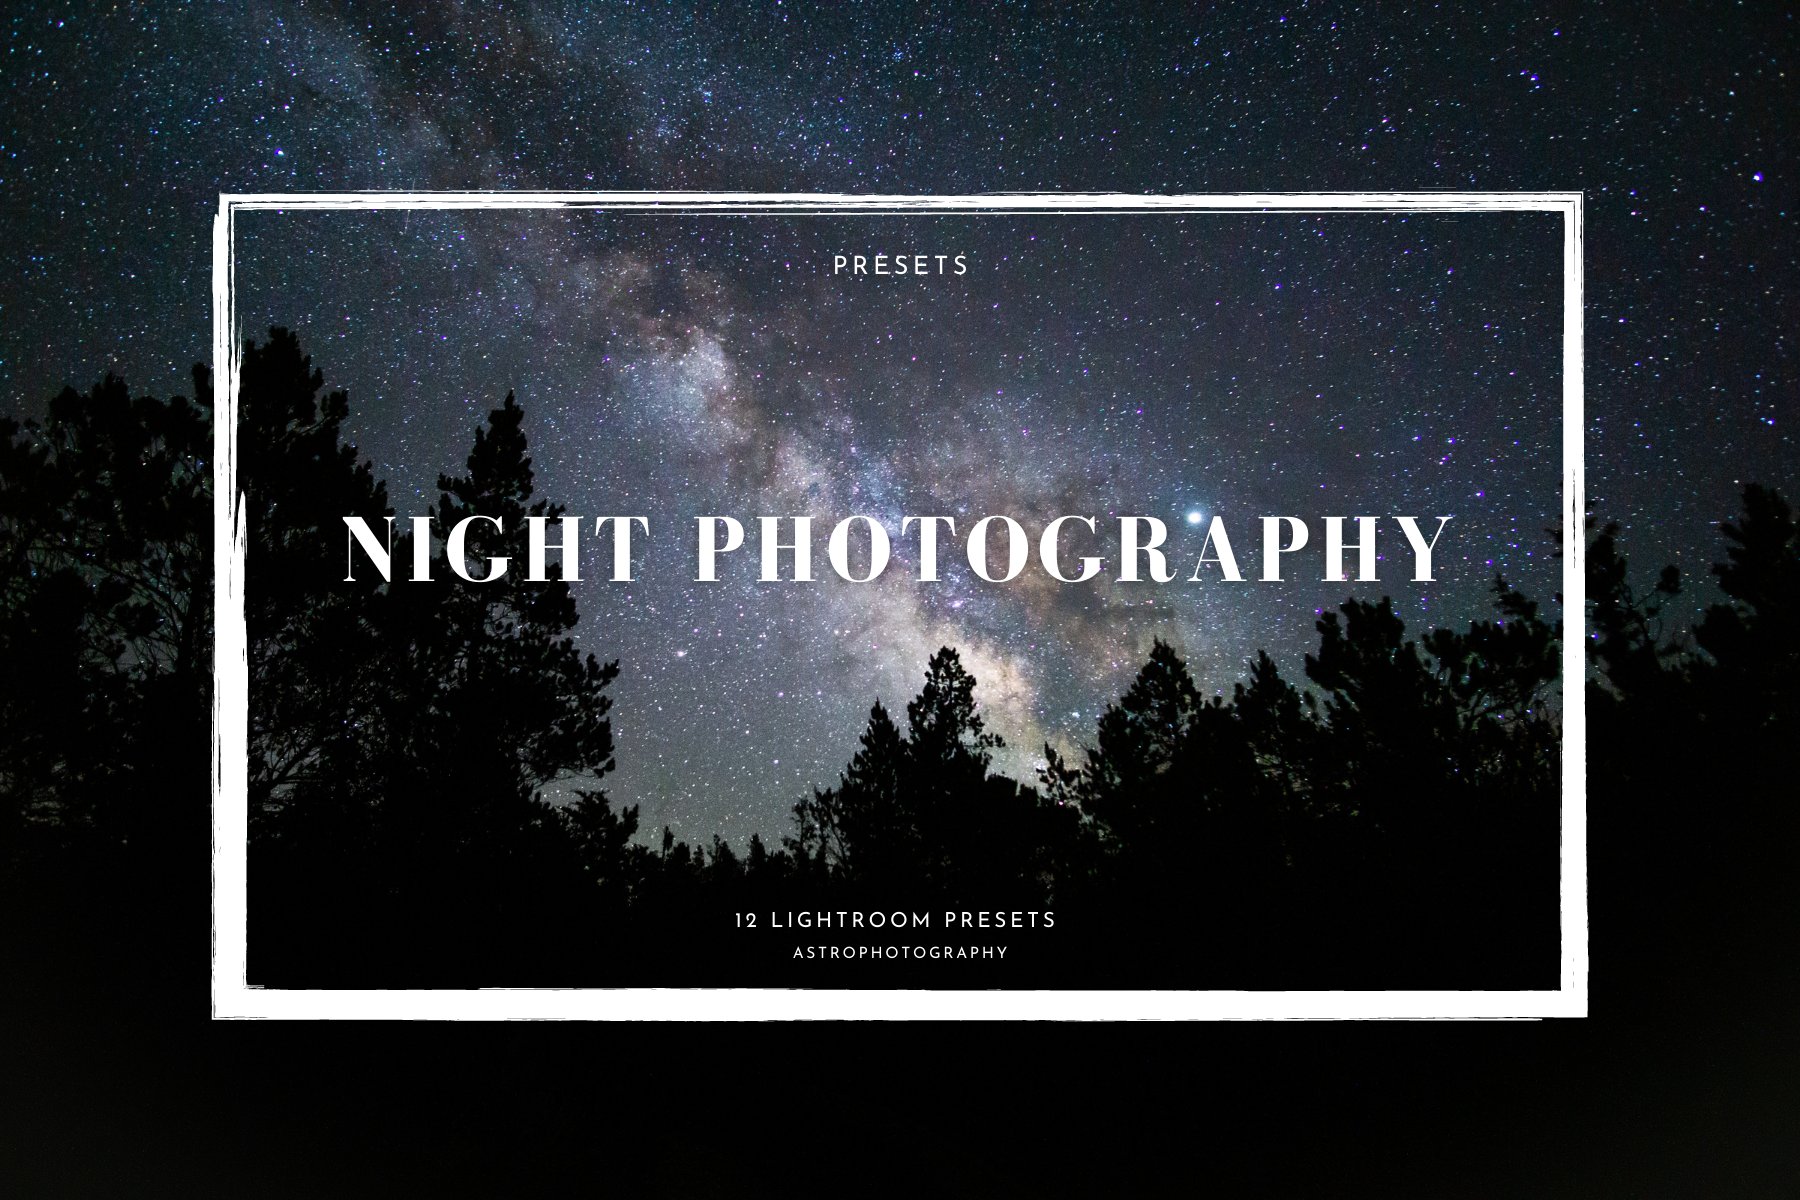 Night Sky Lightroom Presetscover image.